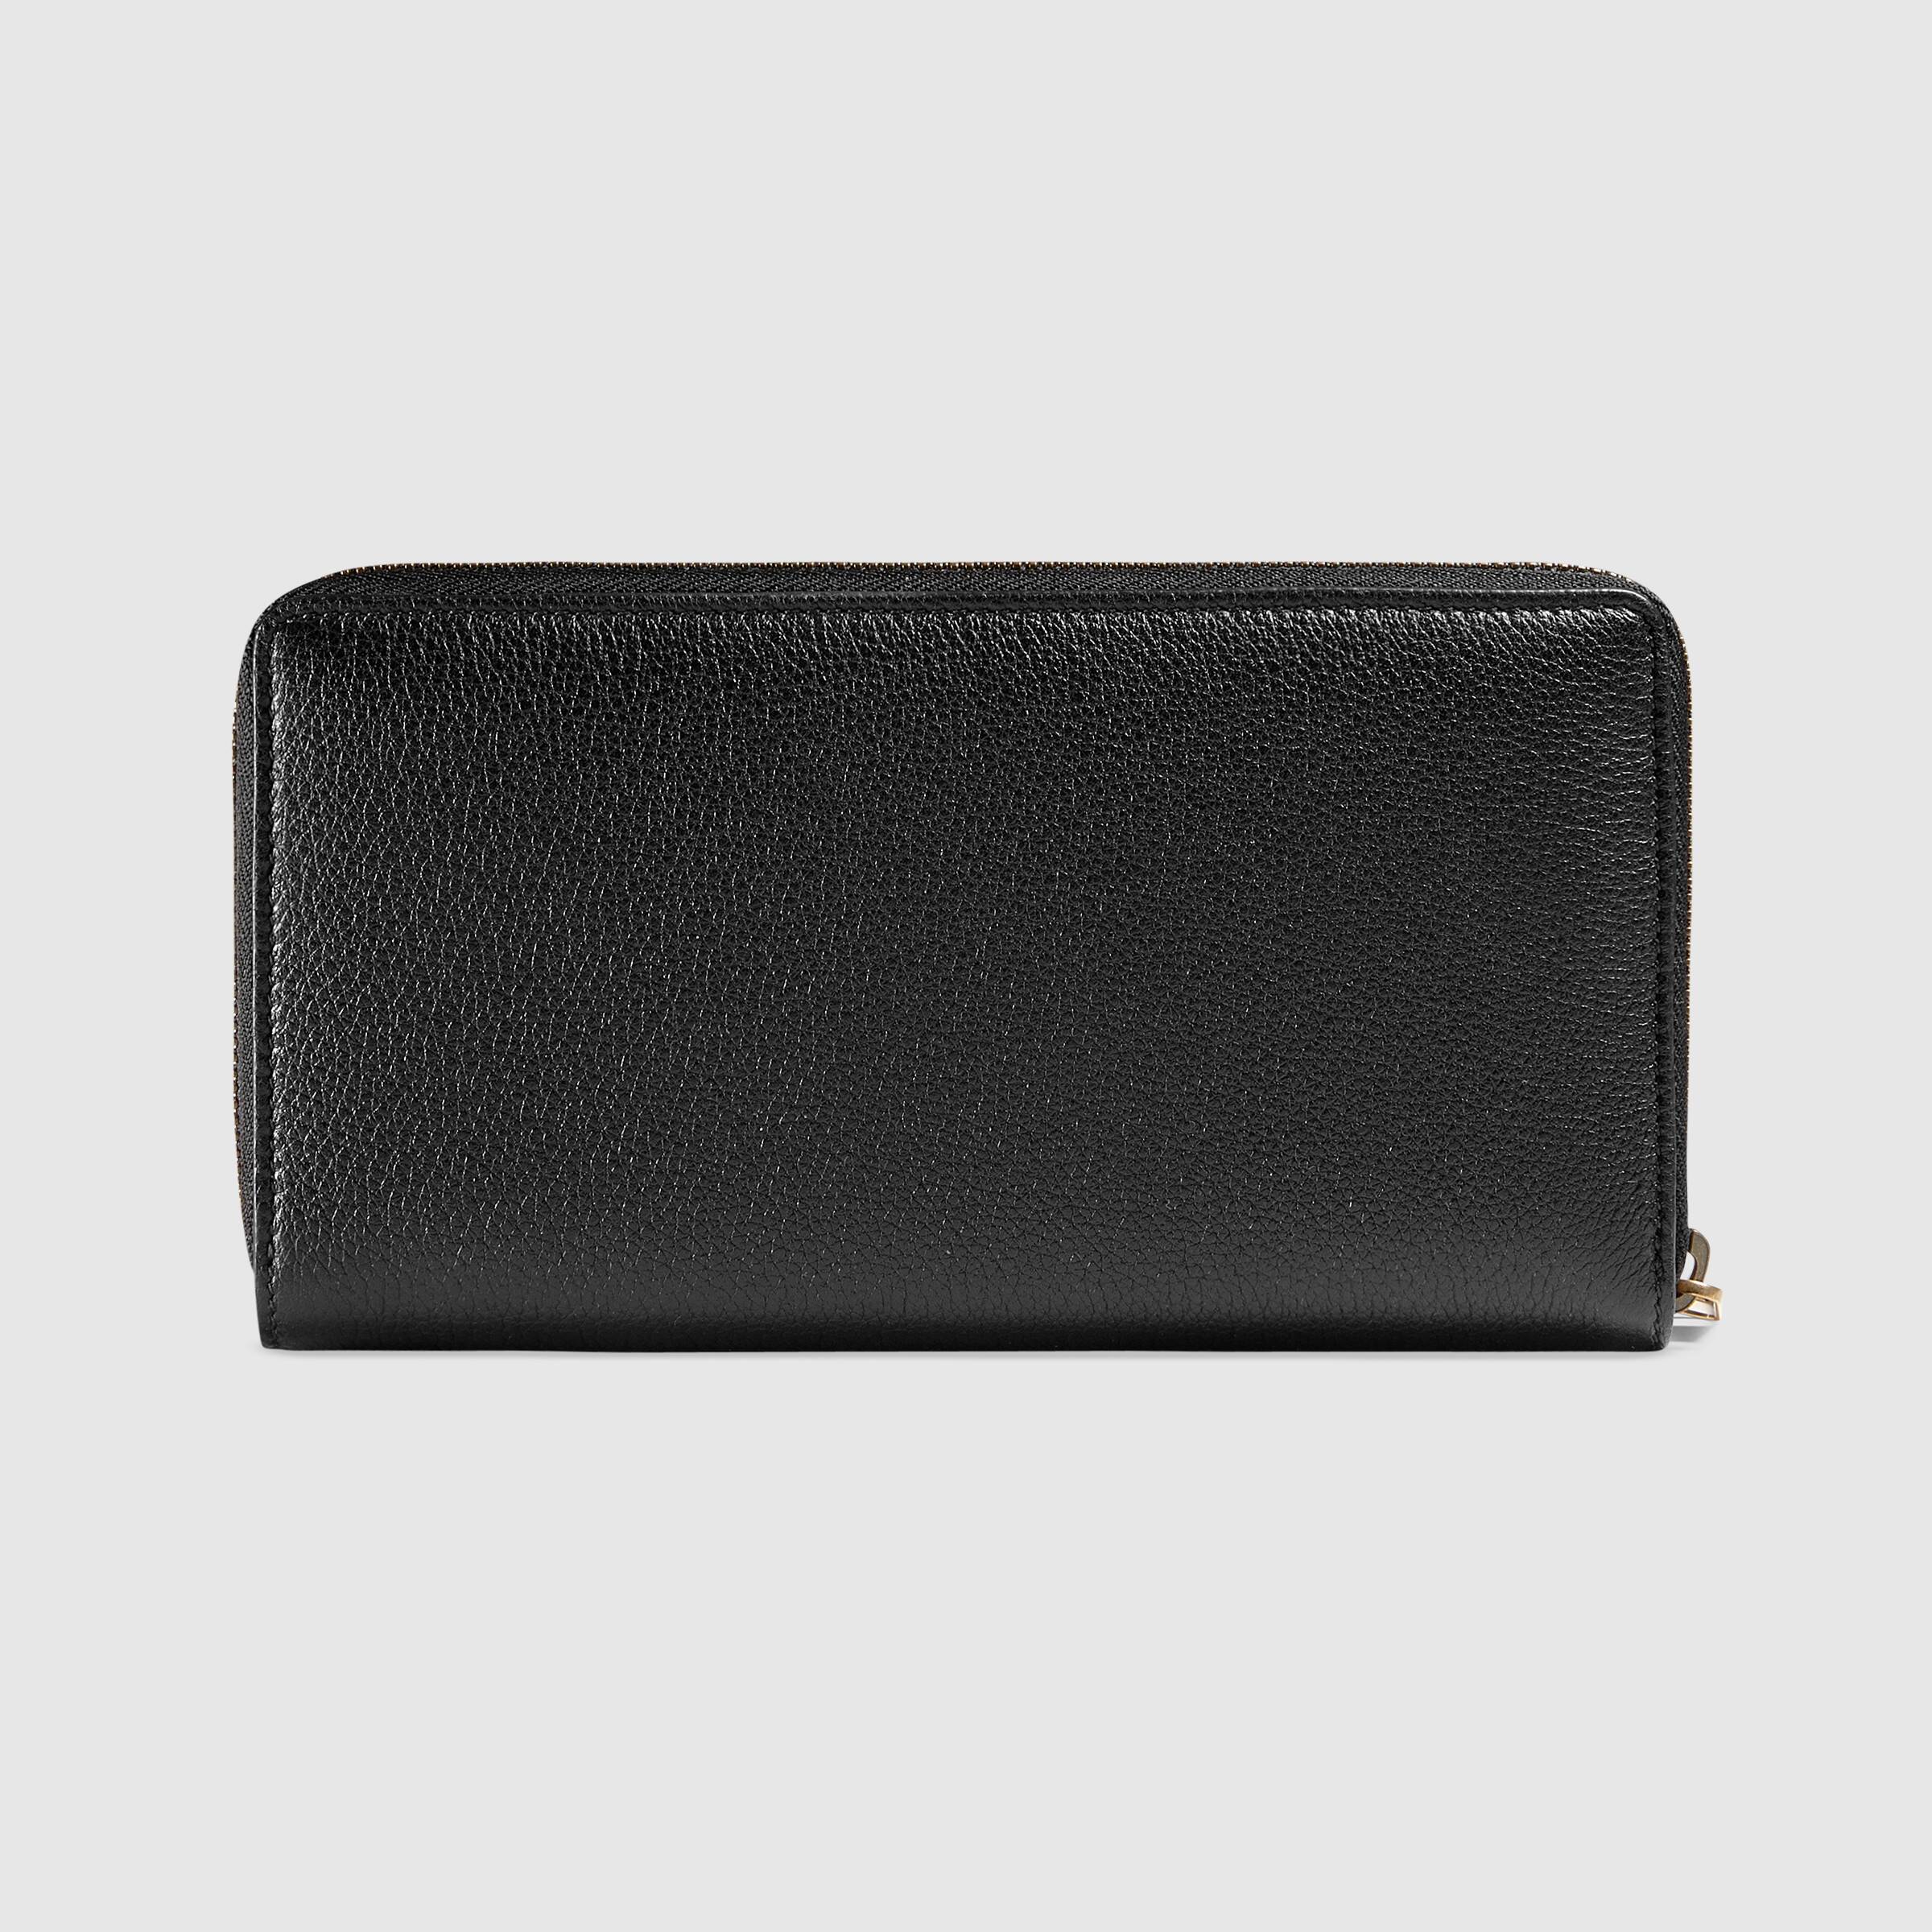 Gucci Print Leather Zip Around Wallet Black